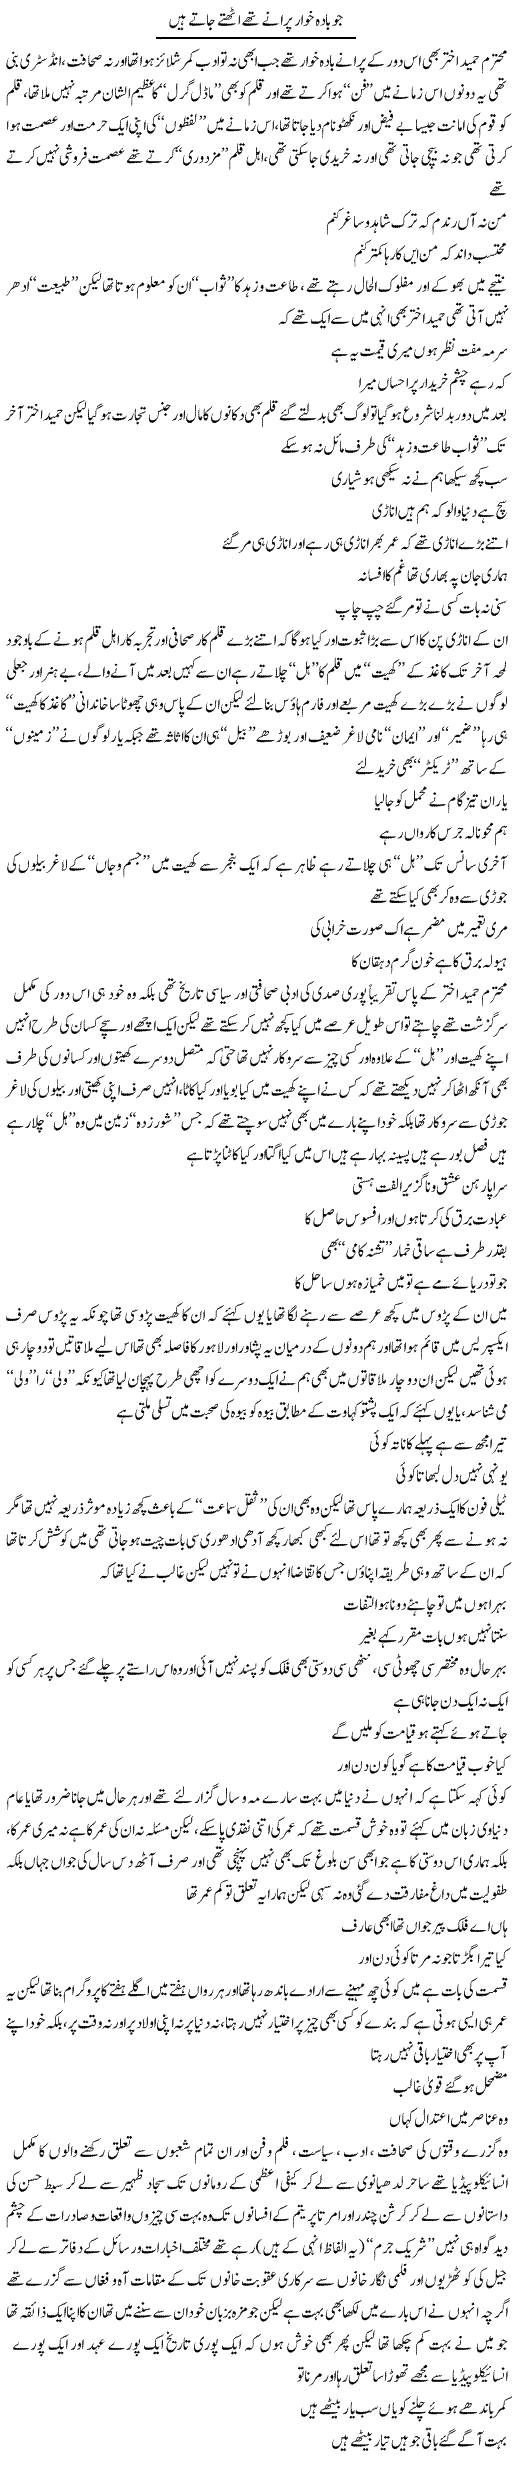 Late Hameed Akhtar Express Column Saadullah Barq 27 October 2011